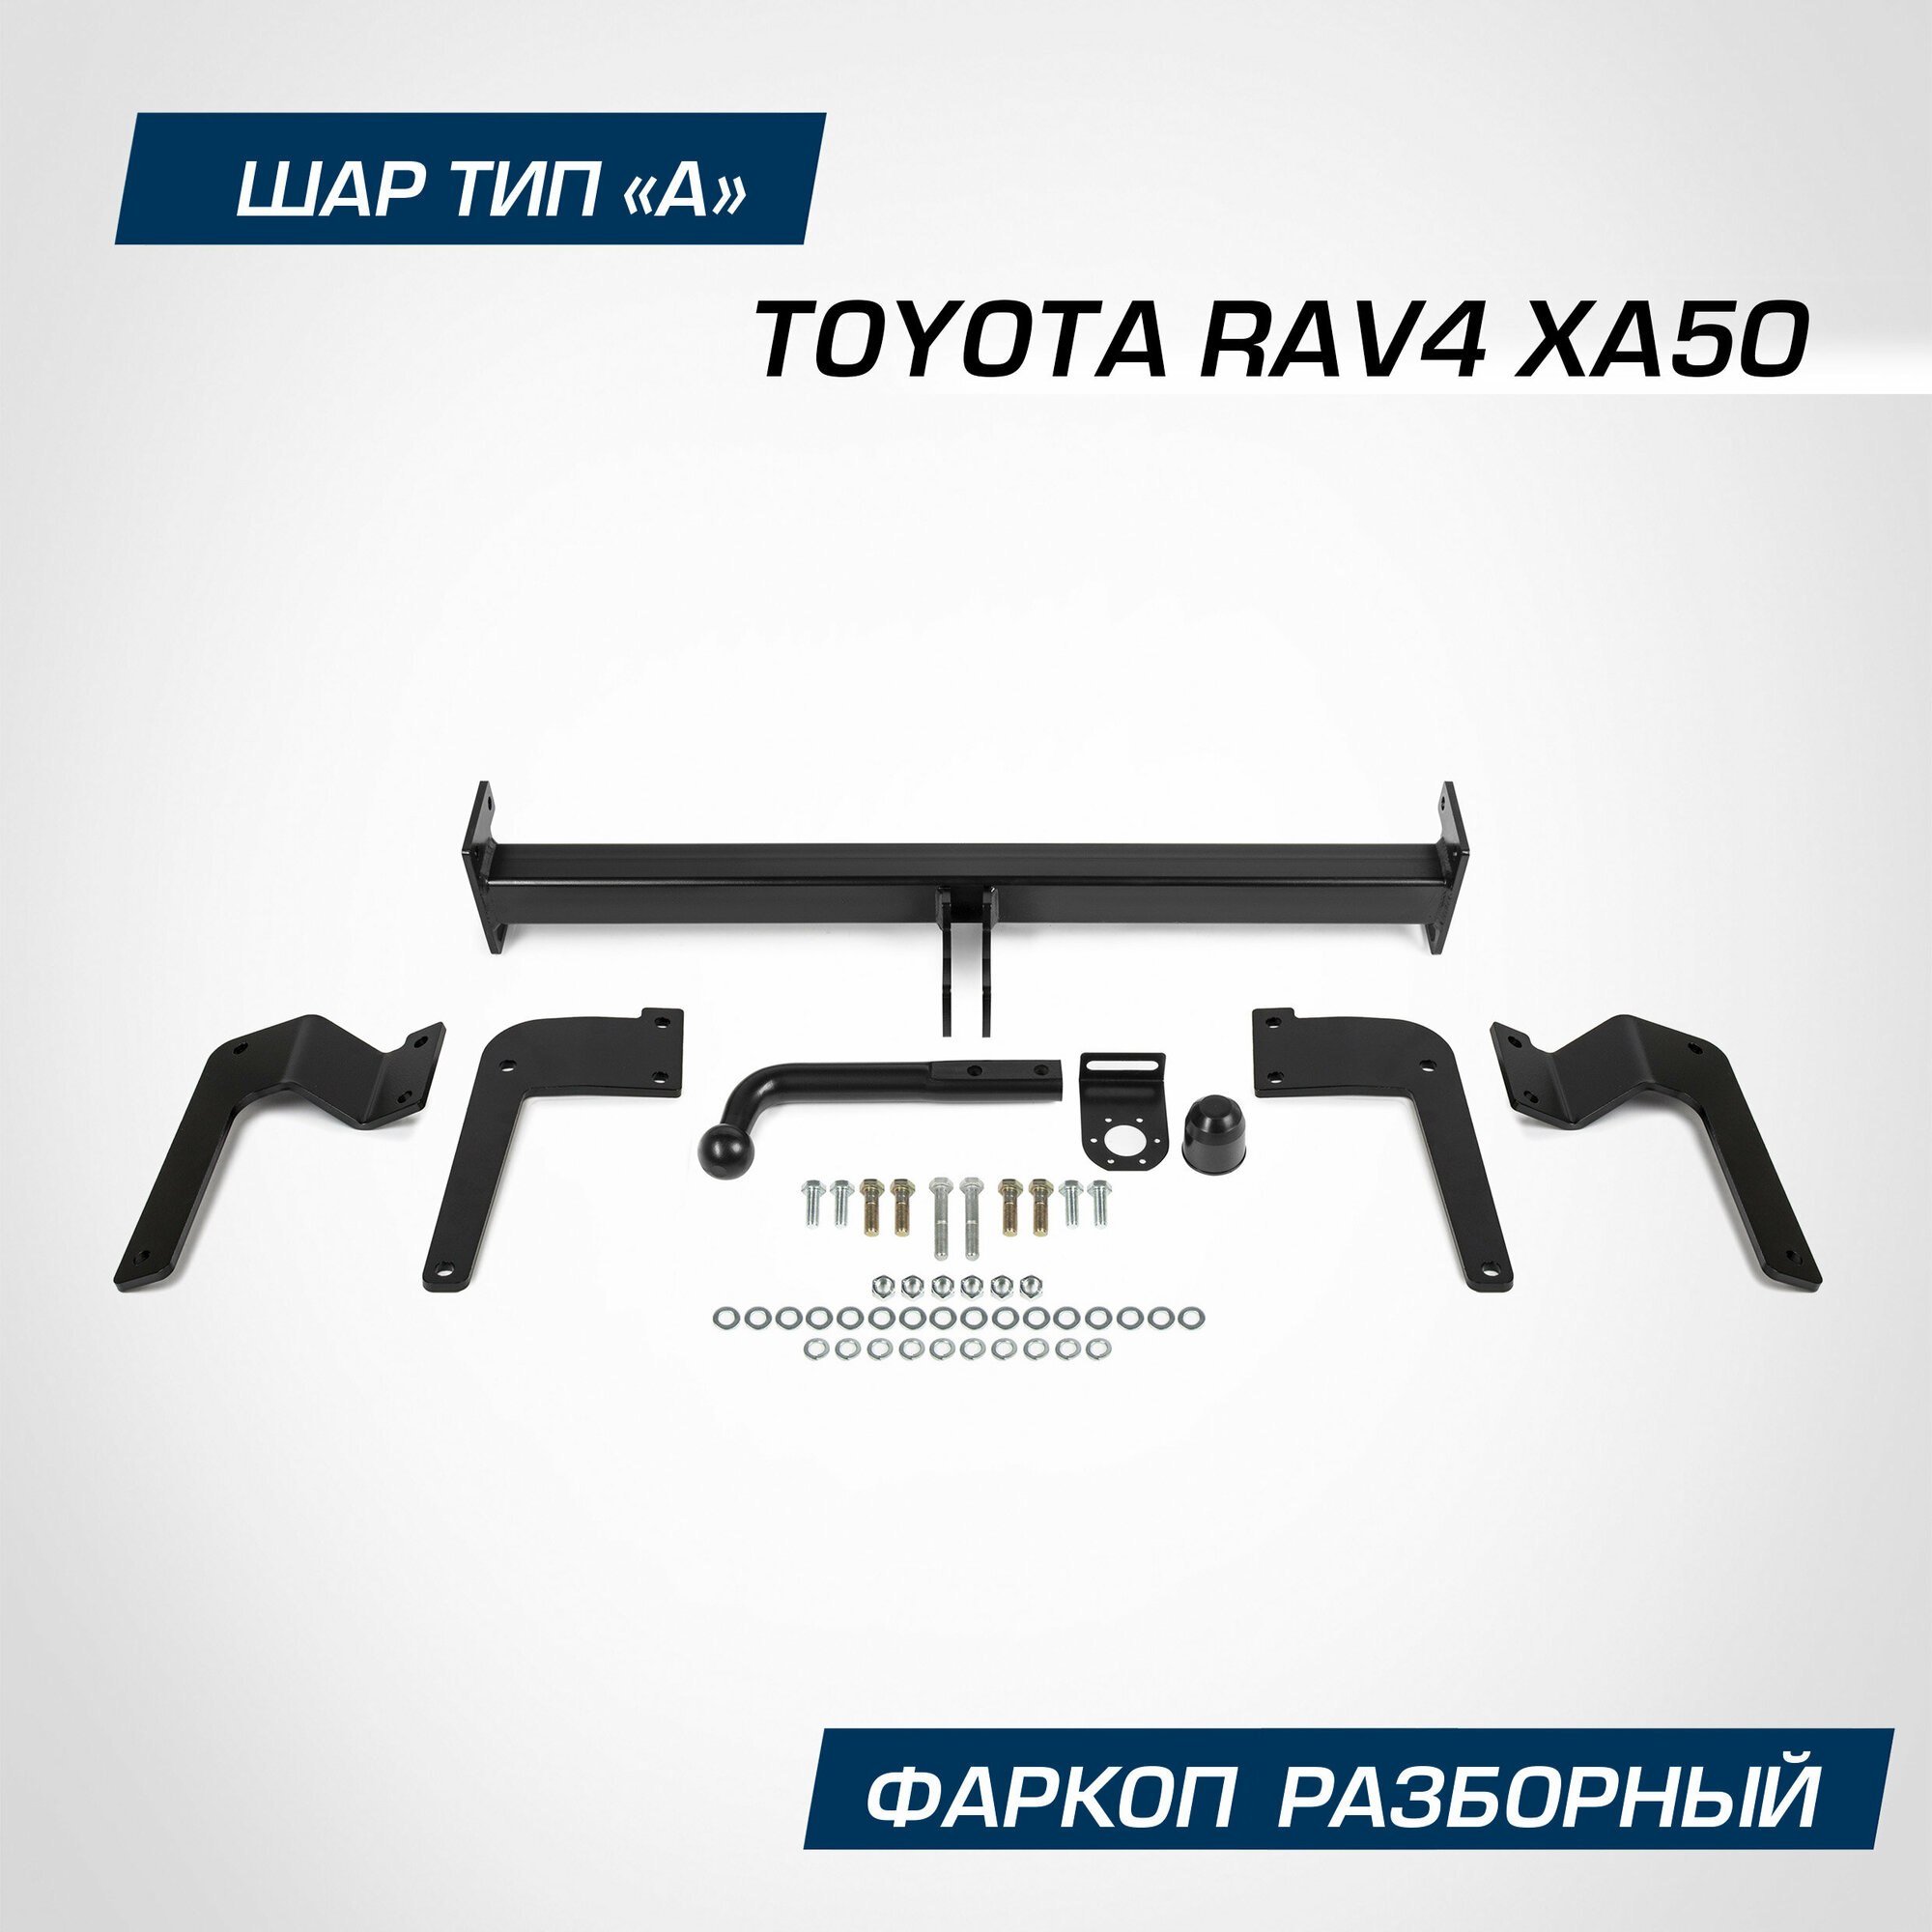 Фаркоп разборный Berg для Toyota RAV4 (Тойота РАВ 4) XA50 2019-н. в шар A, 2000/100 кг, F.5717.001